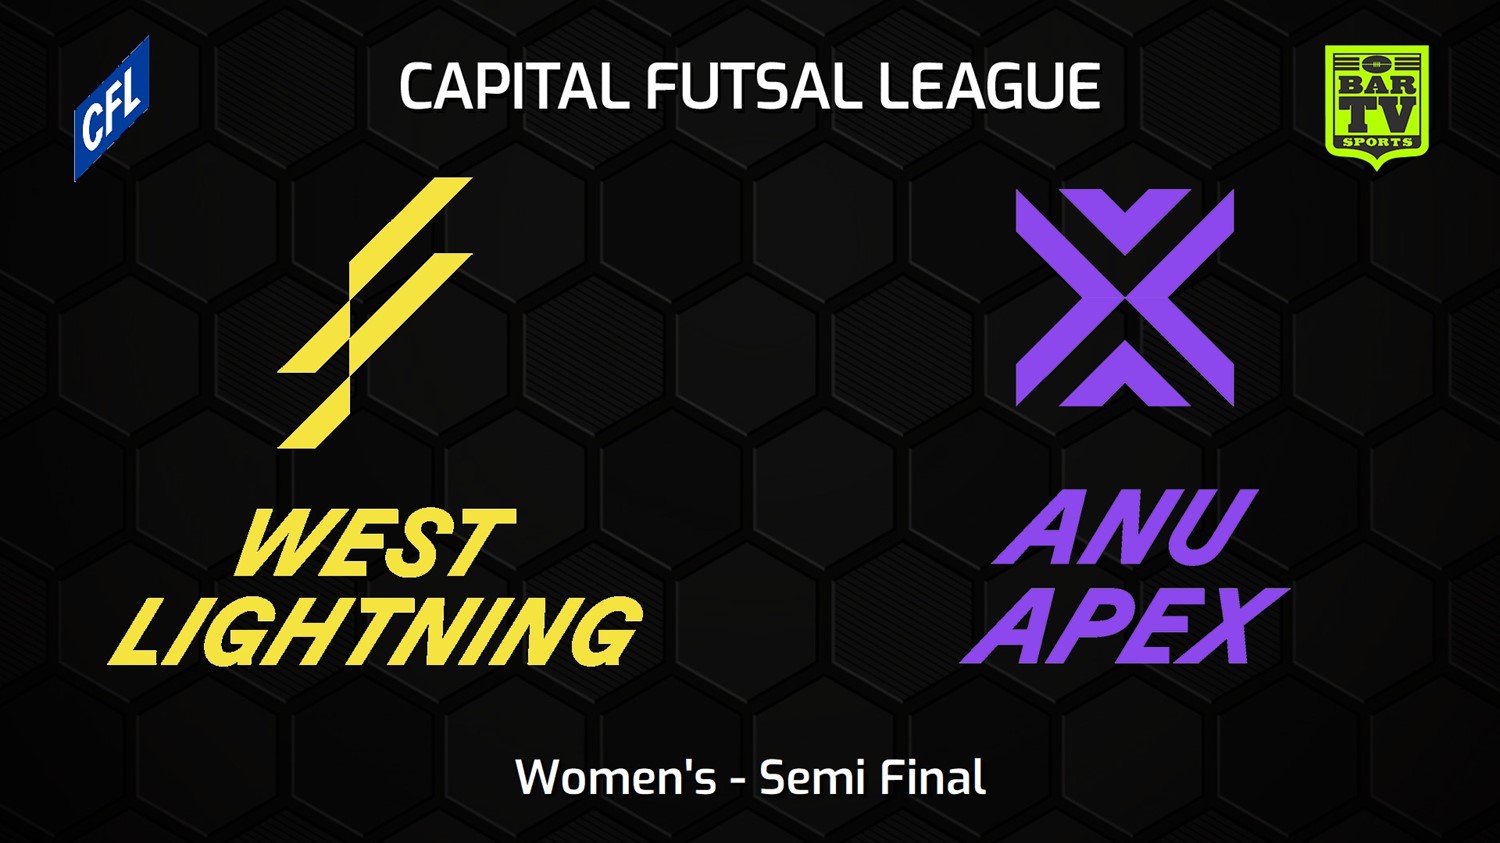 240204-Capital Football Futsal Semi Final - Women's - West Canberra Lightning v ANU Apex Minigame Slate Image